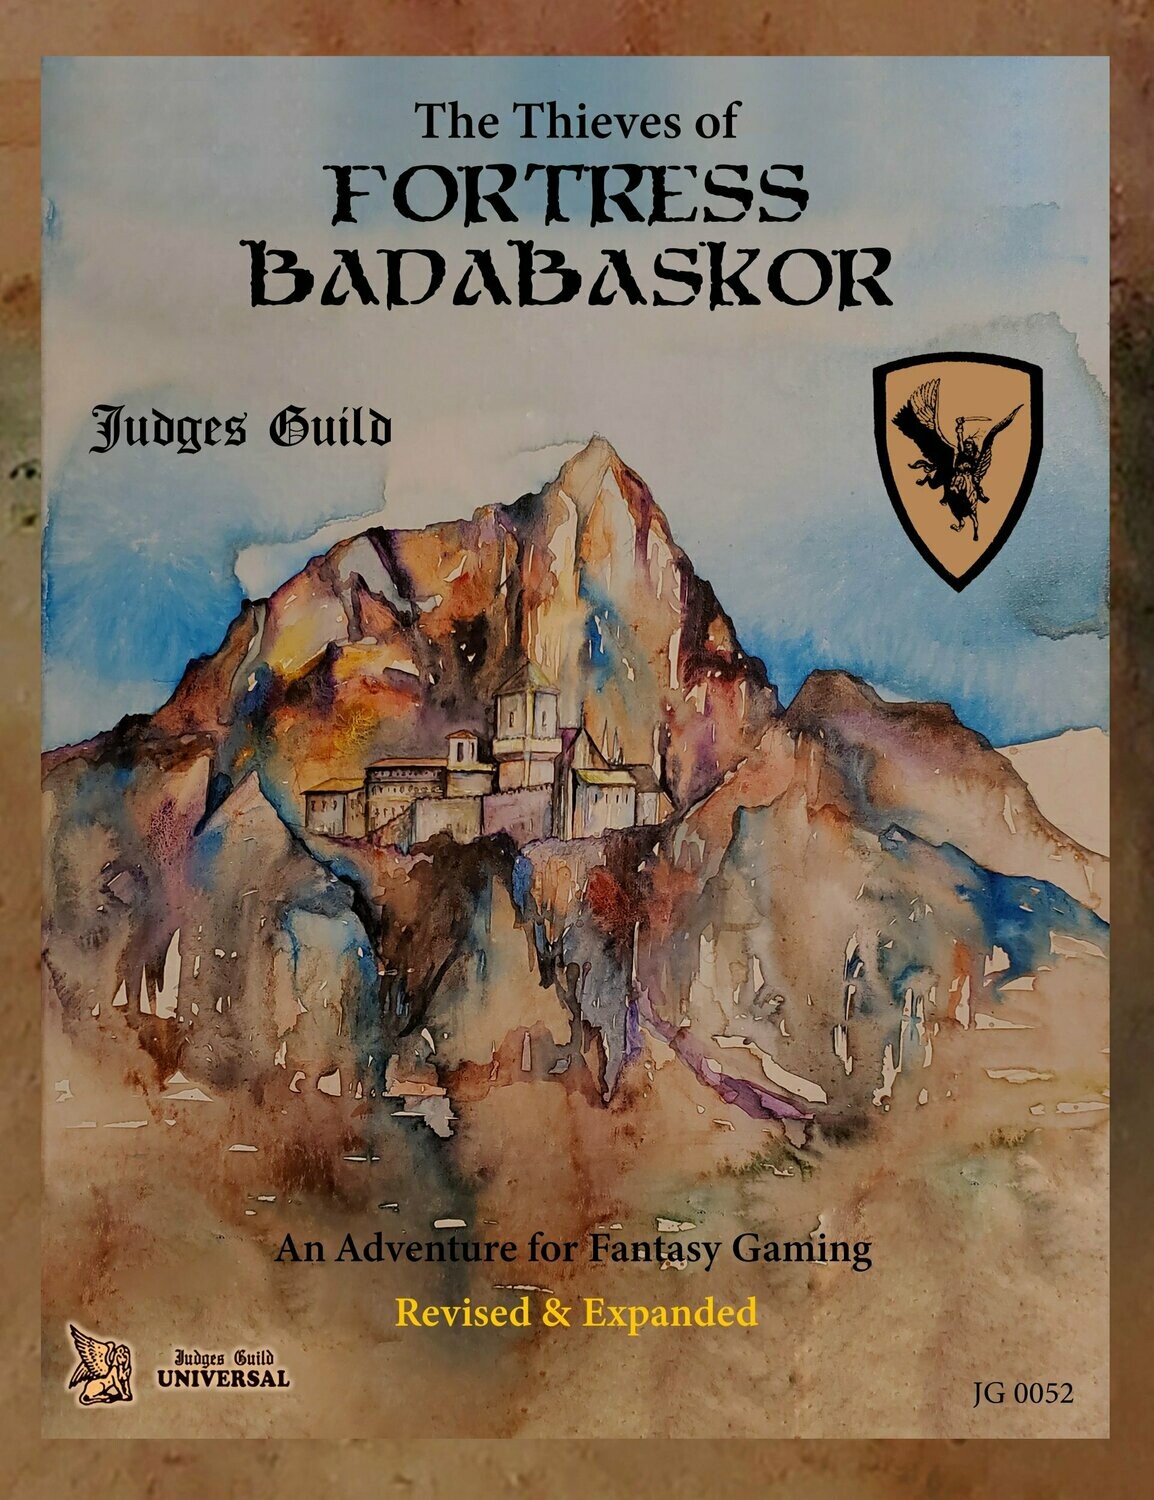 The Thieves of Fortress Badabaskor (Hardback Limited Run)